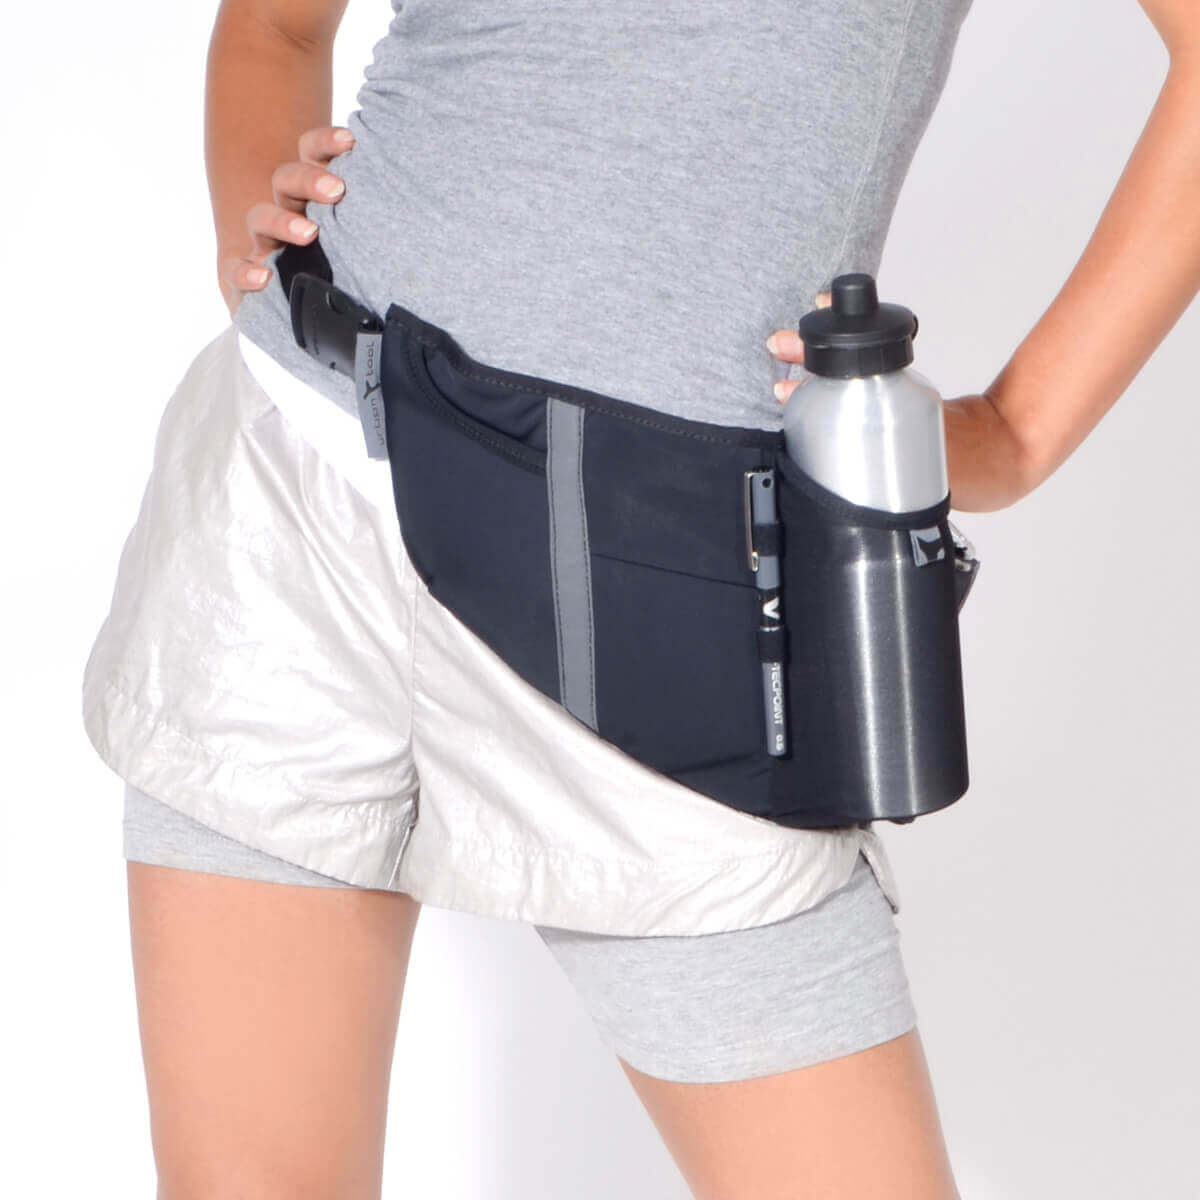 Carrying iPhone Money for Travel Workout Hiking ENGYEN Fanny Pack Waist Bag for Women Men Running Packs Gear with Phone Water Bottle Holder Adjustable Belt 